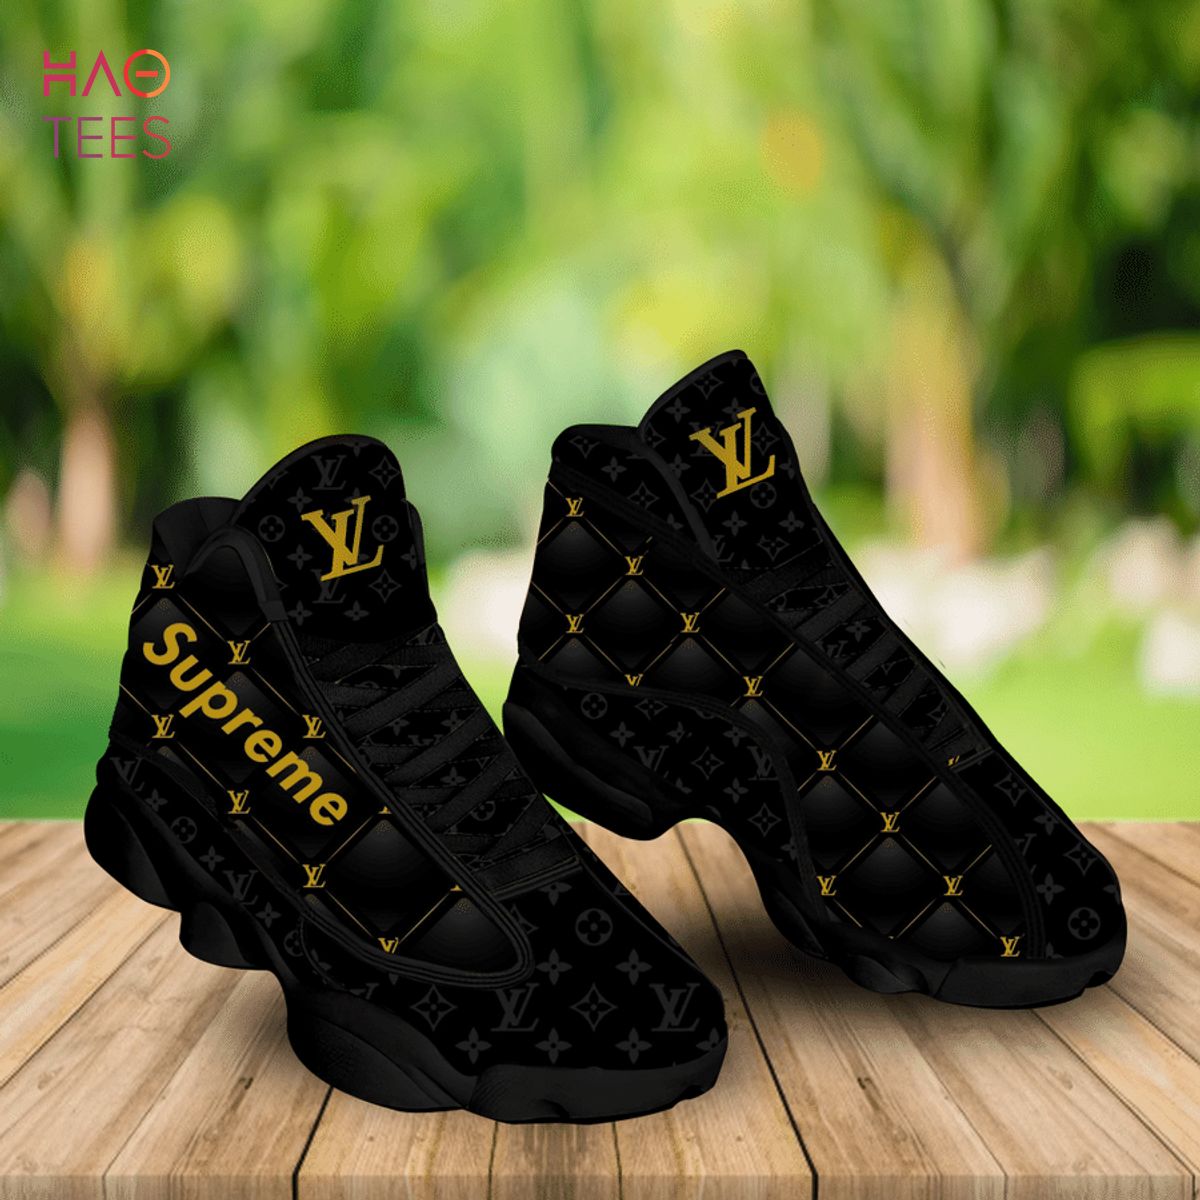 Louis Vuitton Lv Supreme Black Air Jordan 13 Sneakers Shoes Gifts For Men Women